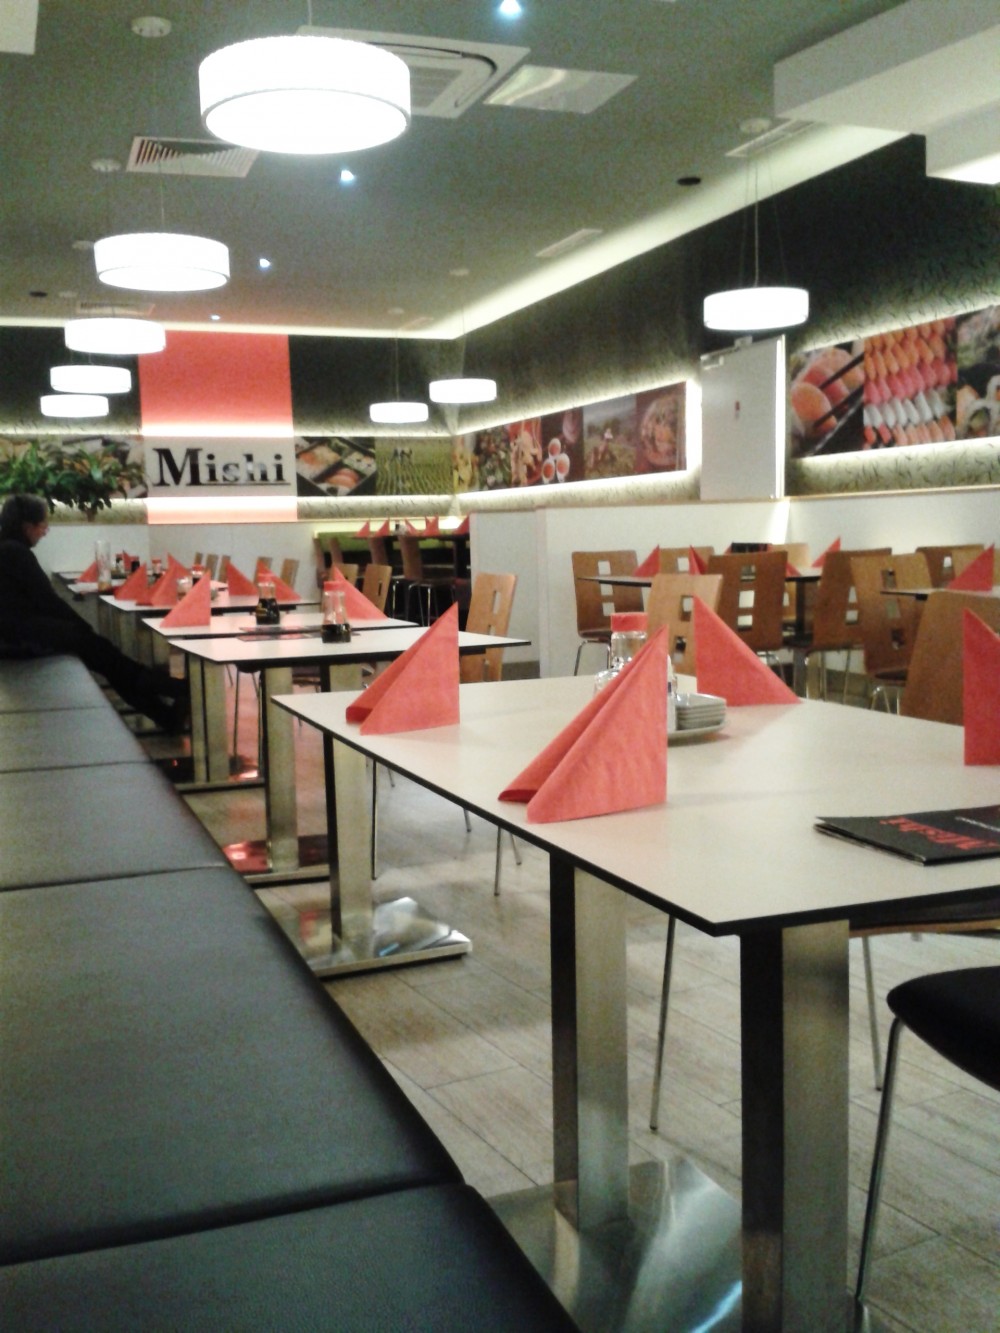 Mishi - Im Lokal (NR-Lokal) - Mishi Asia Restaurant - Wien